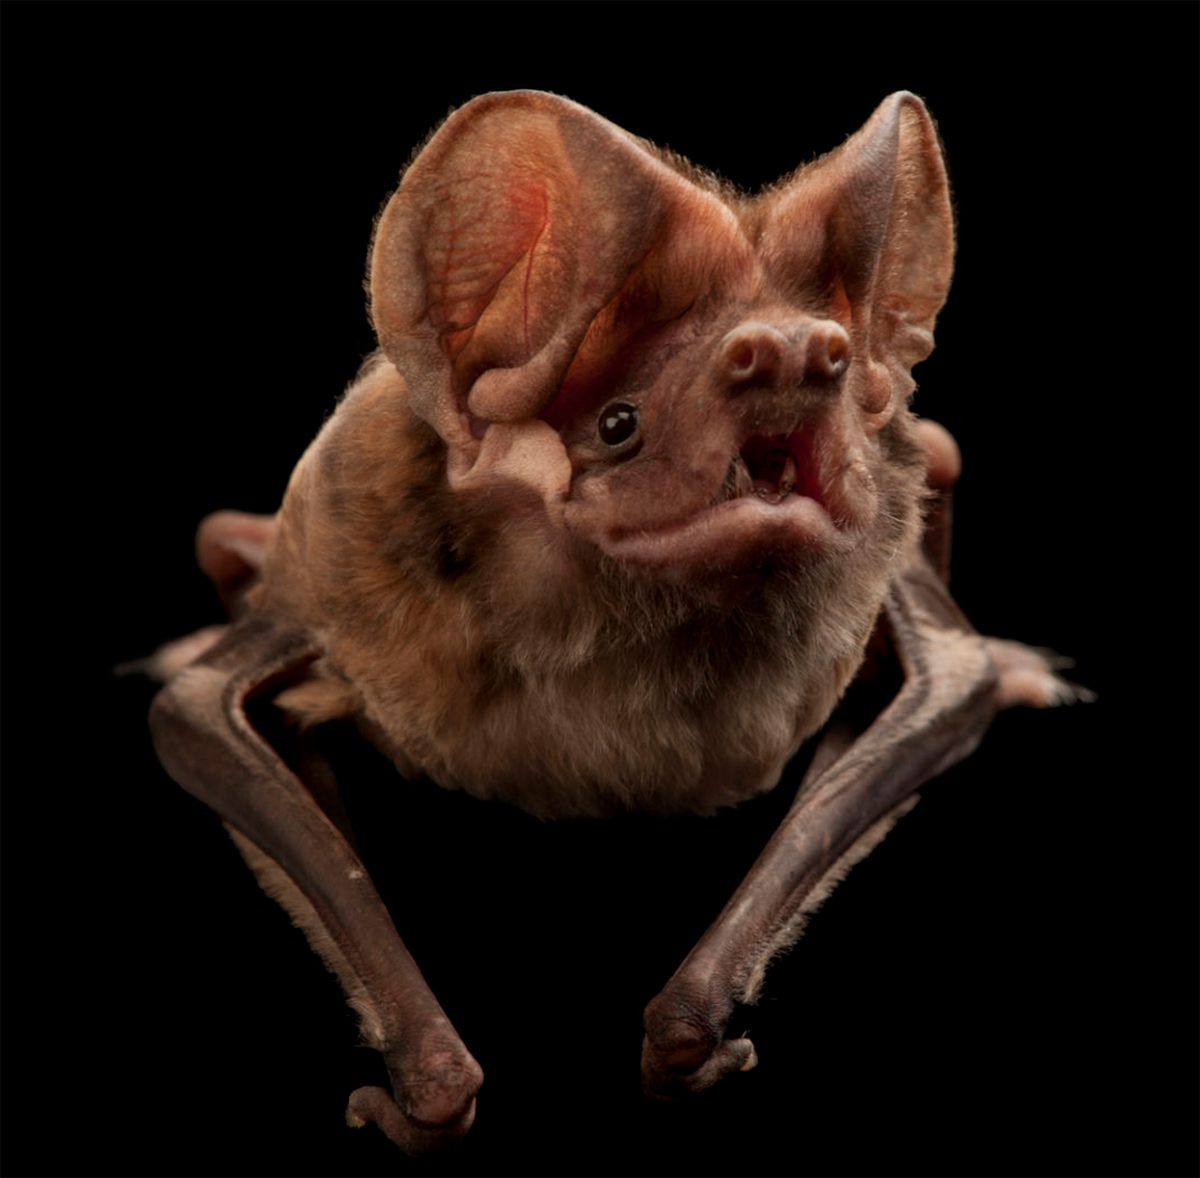 Florida bonneted bat